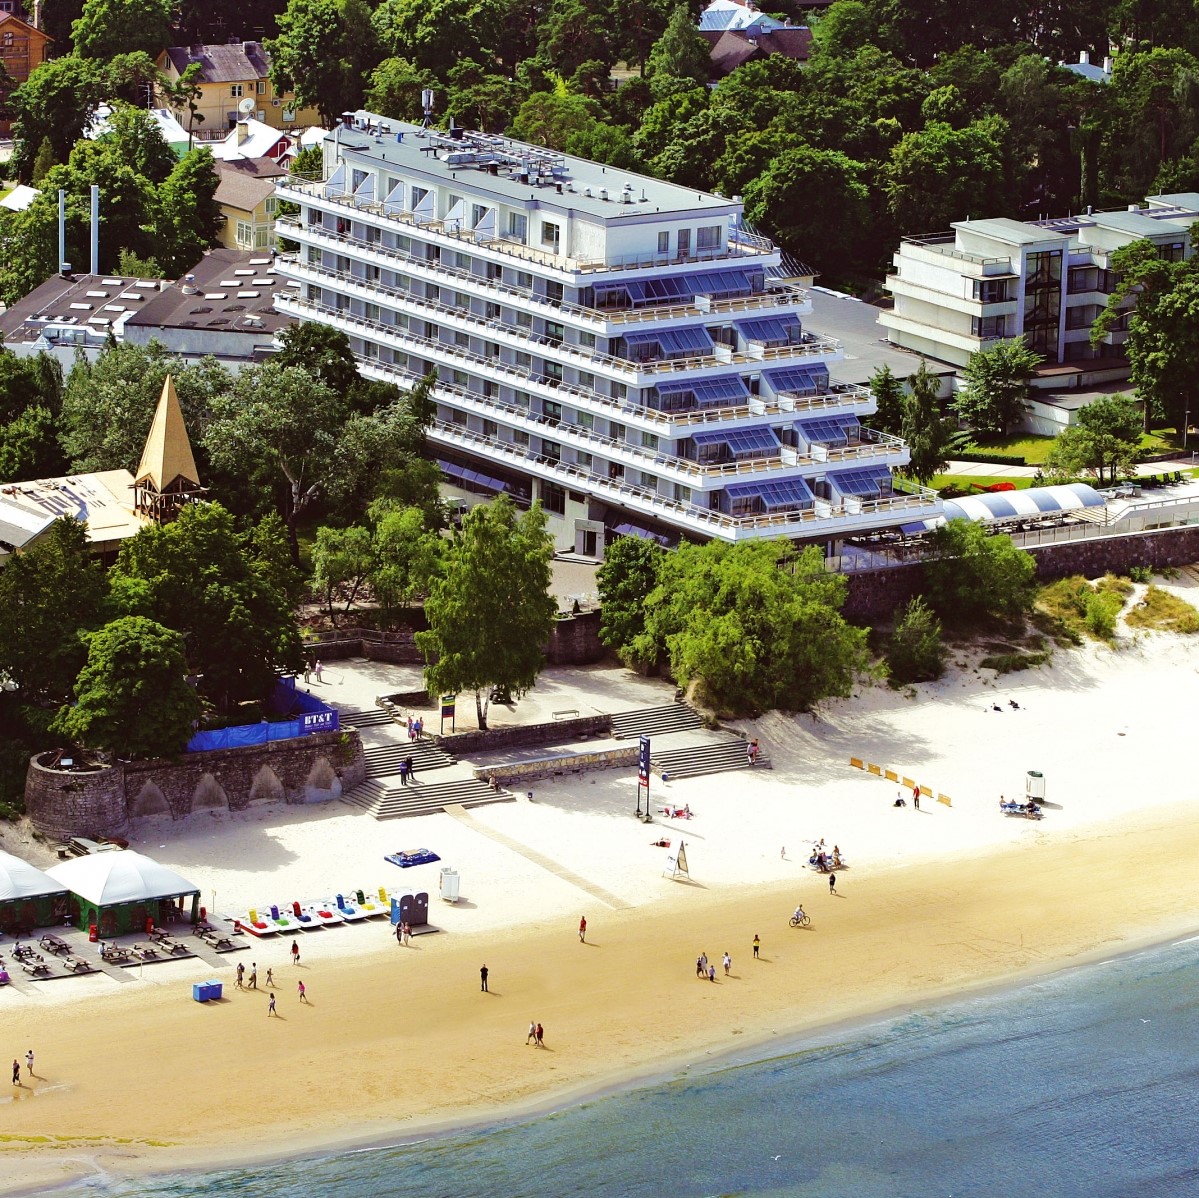 Resort hotels